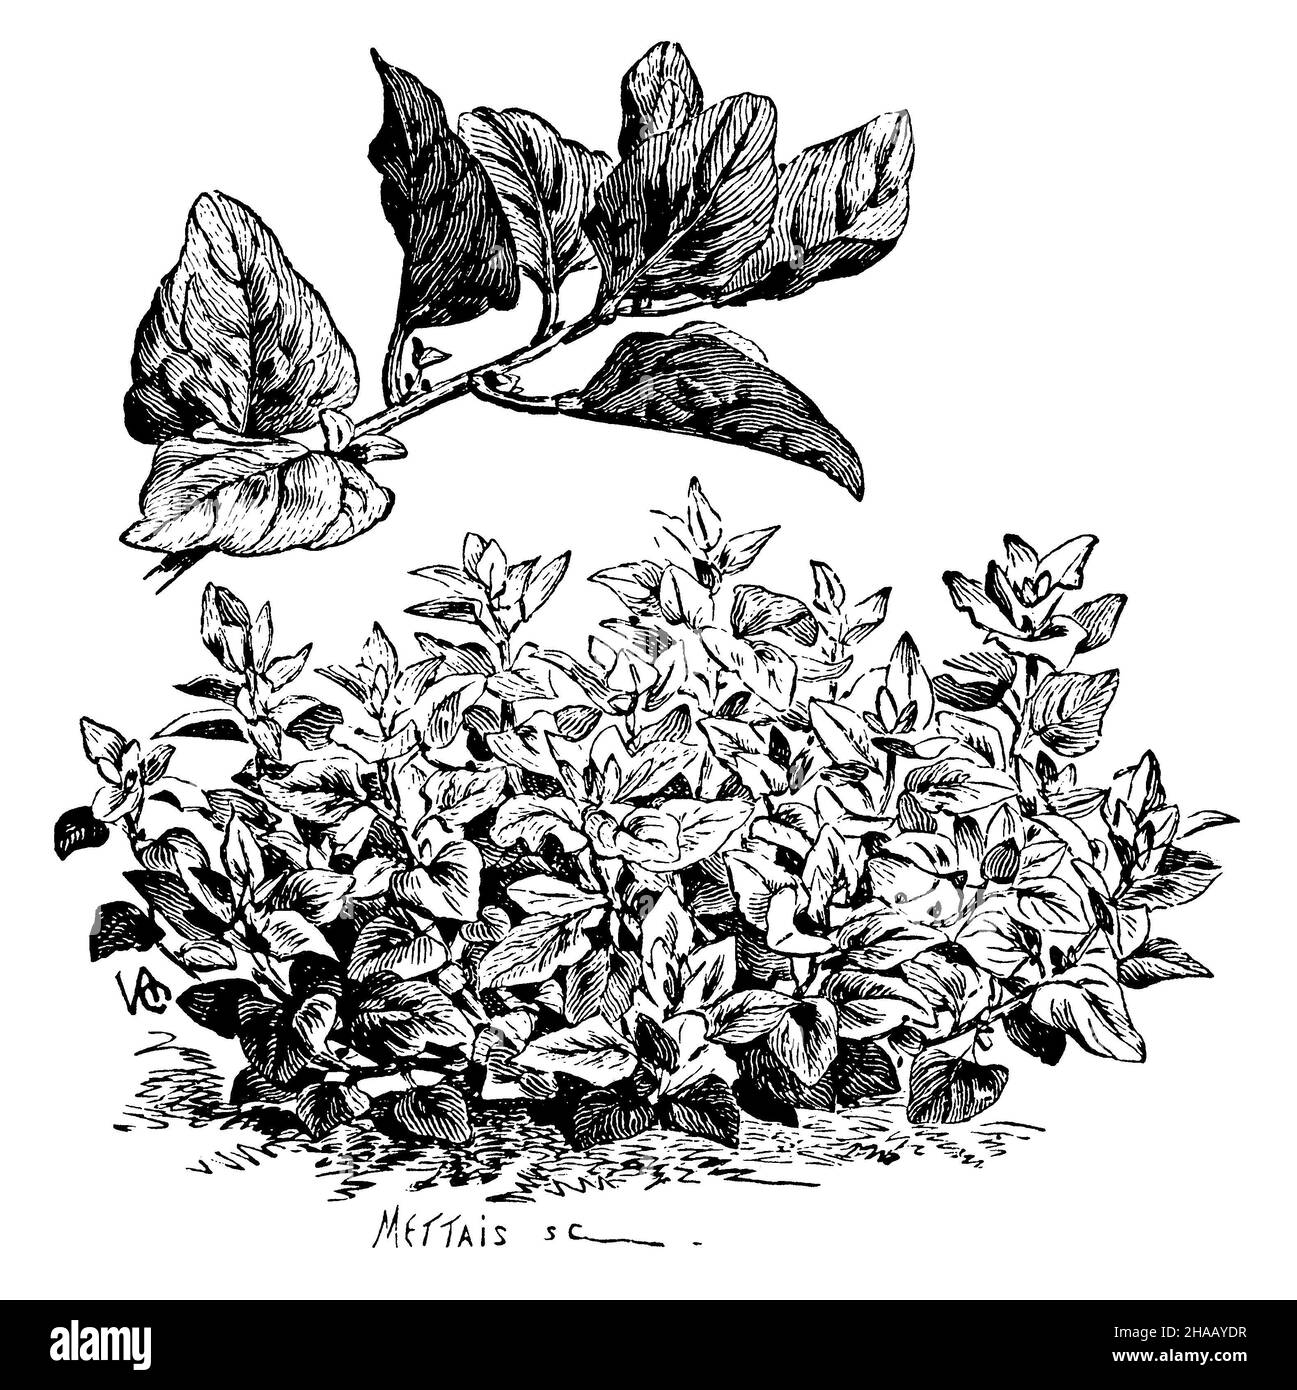 New Zealand spinach, Tetragonia tetragonioide, Mettais (printing pattern book, 1911), Spinat, Neuseeländer  (Tetragonia tetragonoides) Stock Photo